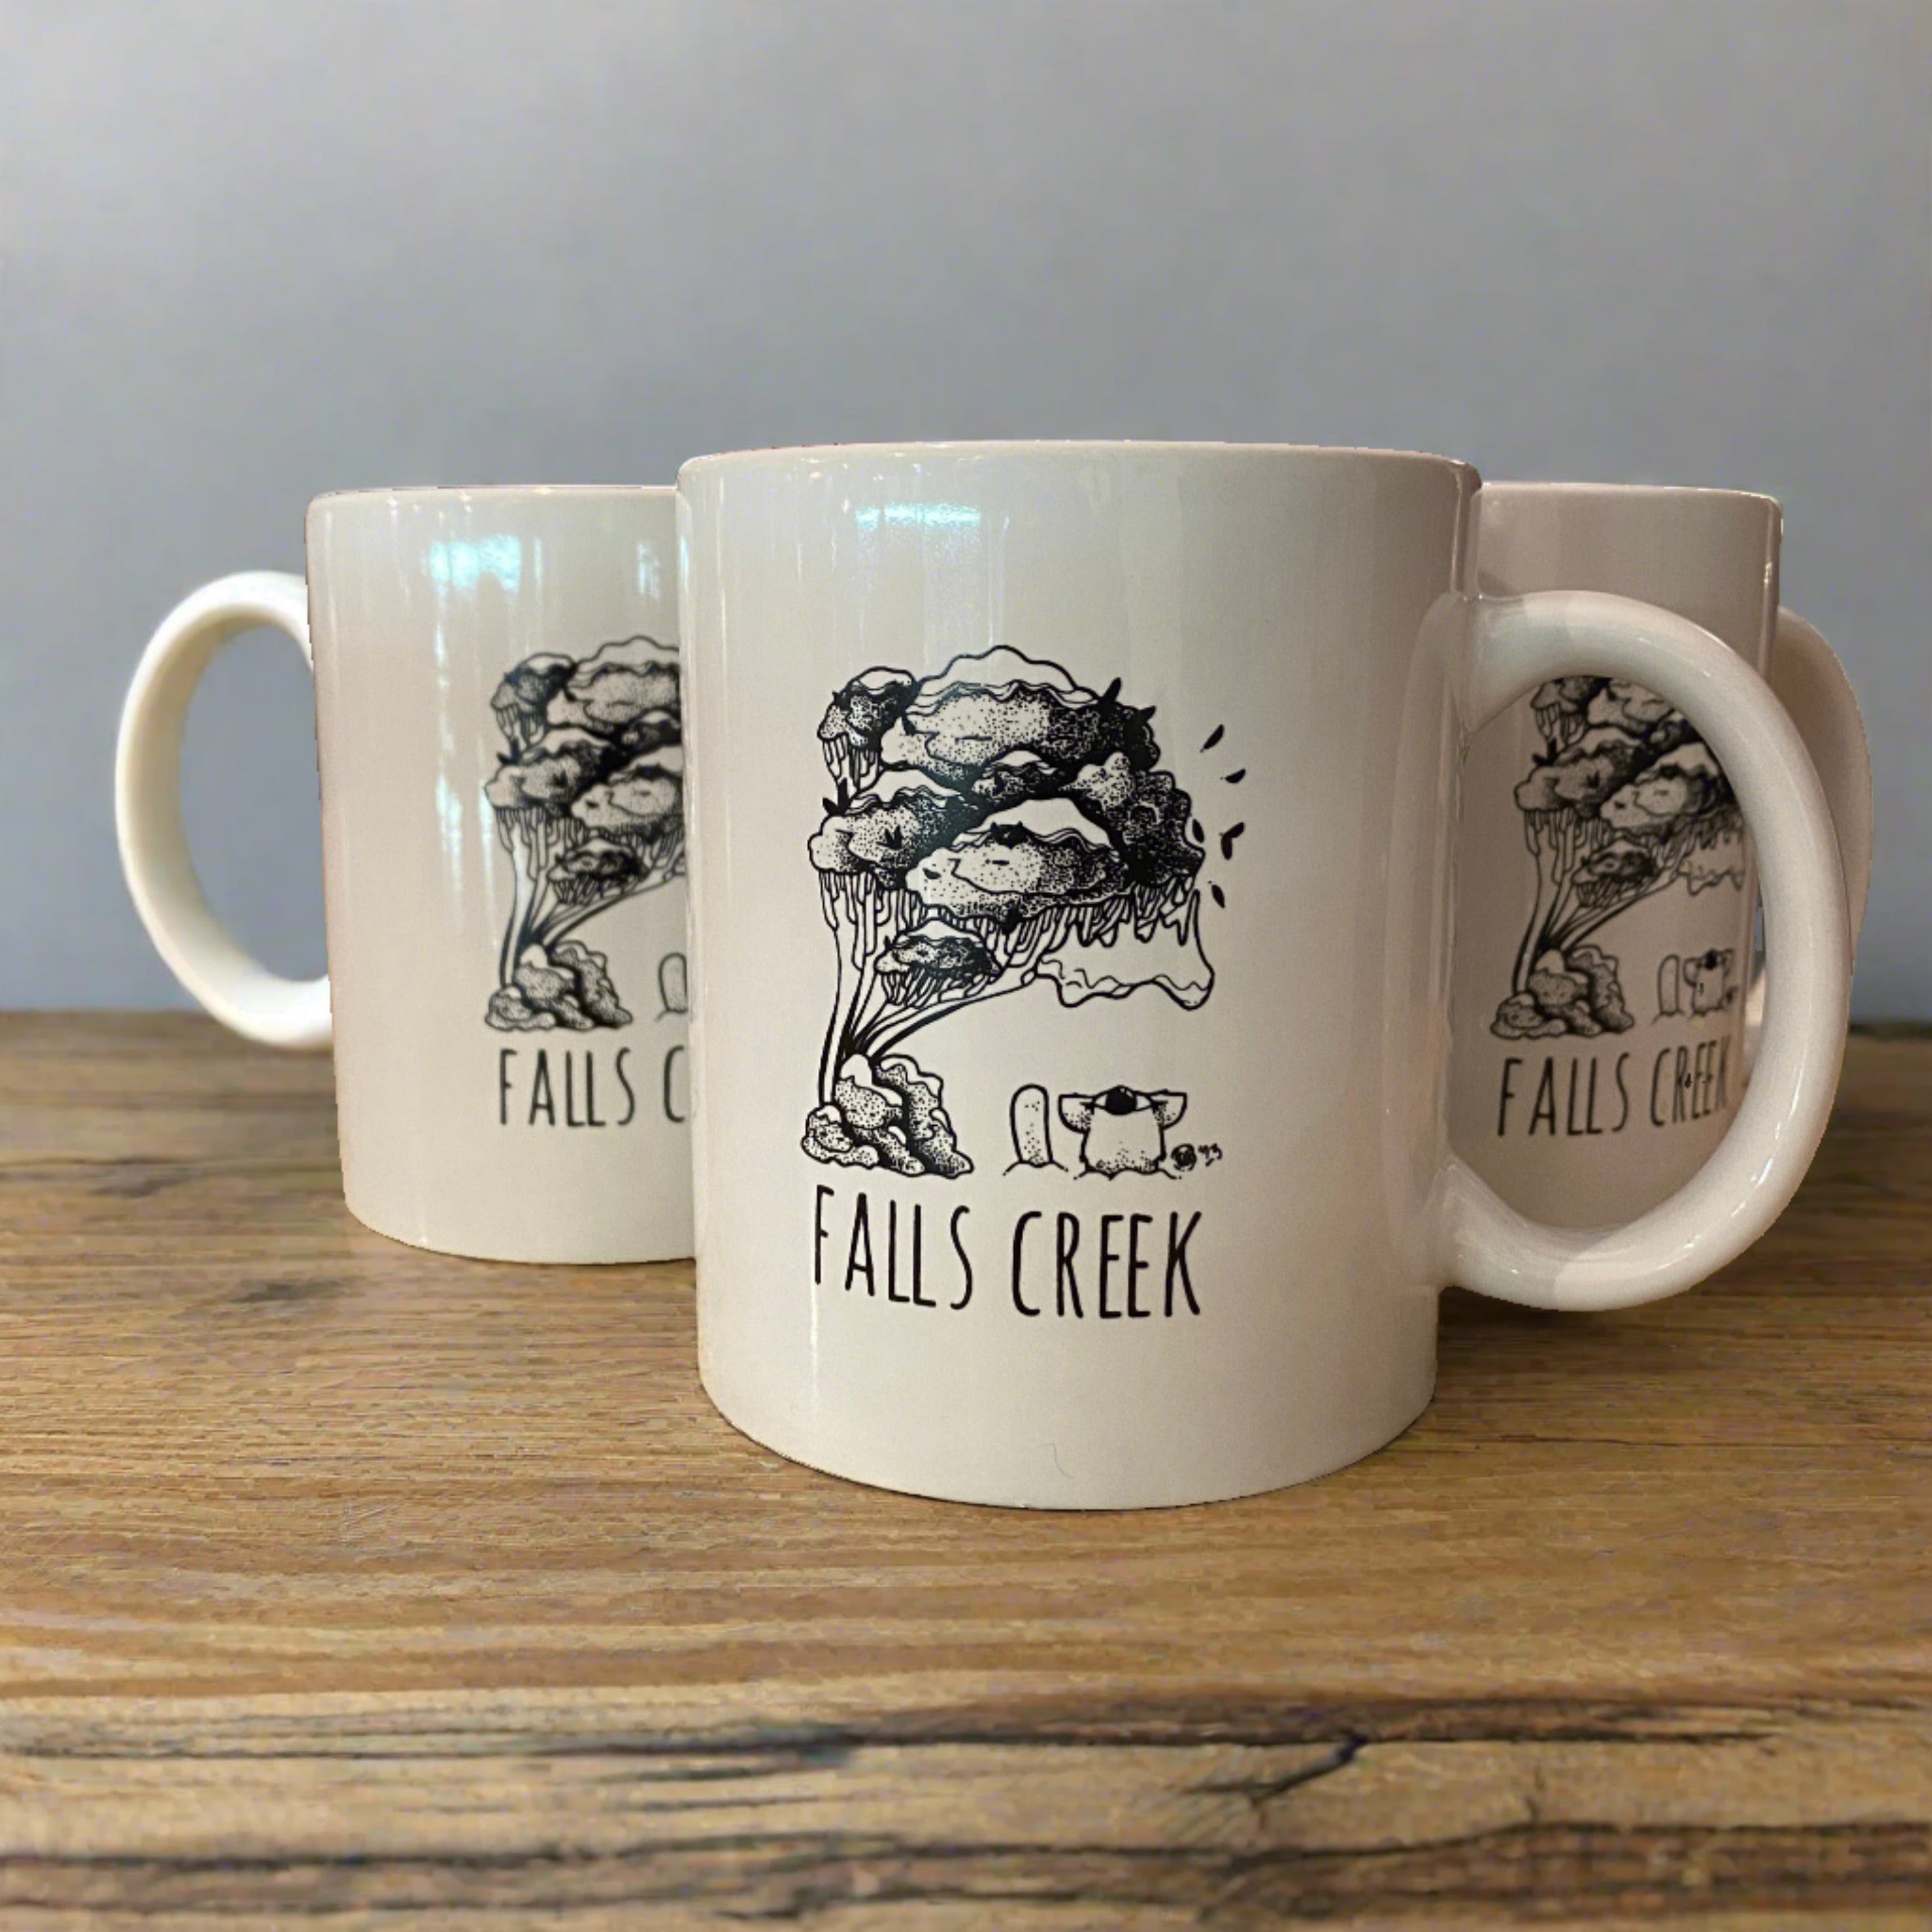 Falls Creek Agent K Ceramic Mugs. set of 3 on wooden bench